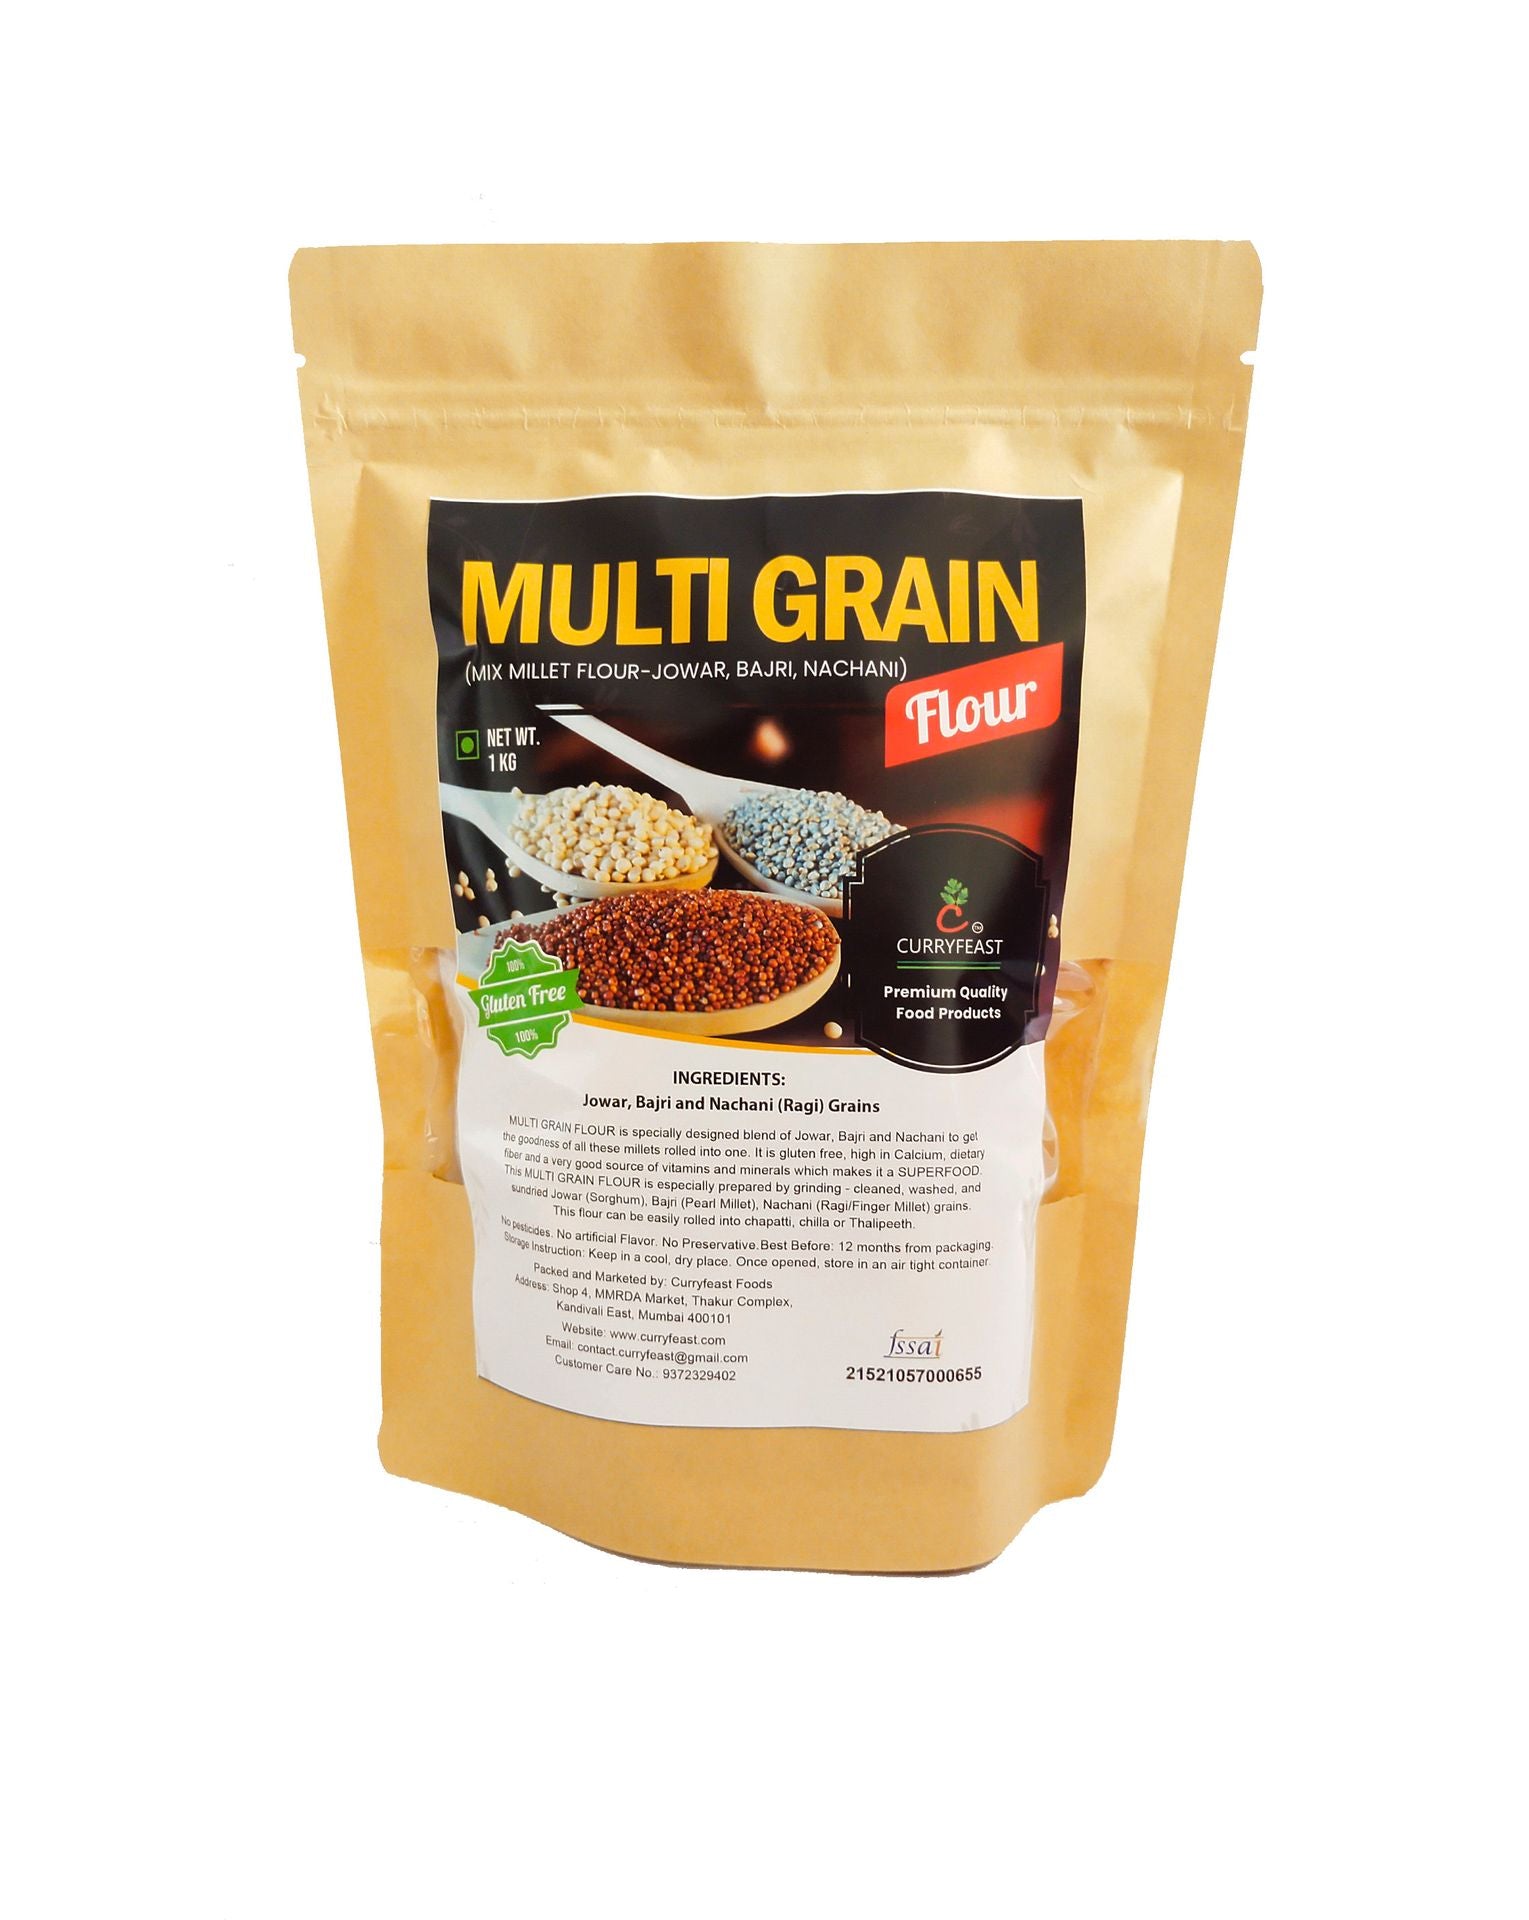 Multigrain (Jowar, Bajri, Nachani) Flour - 1Kg - hfnl!fe